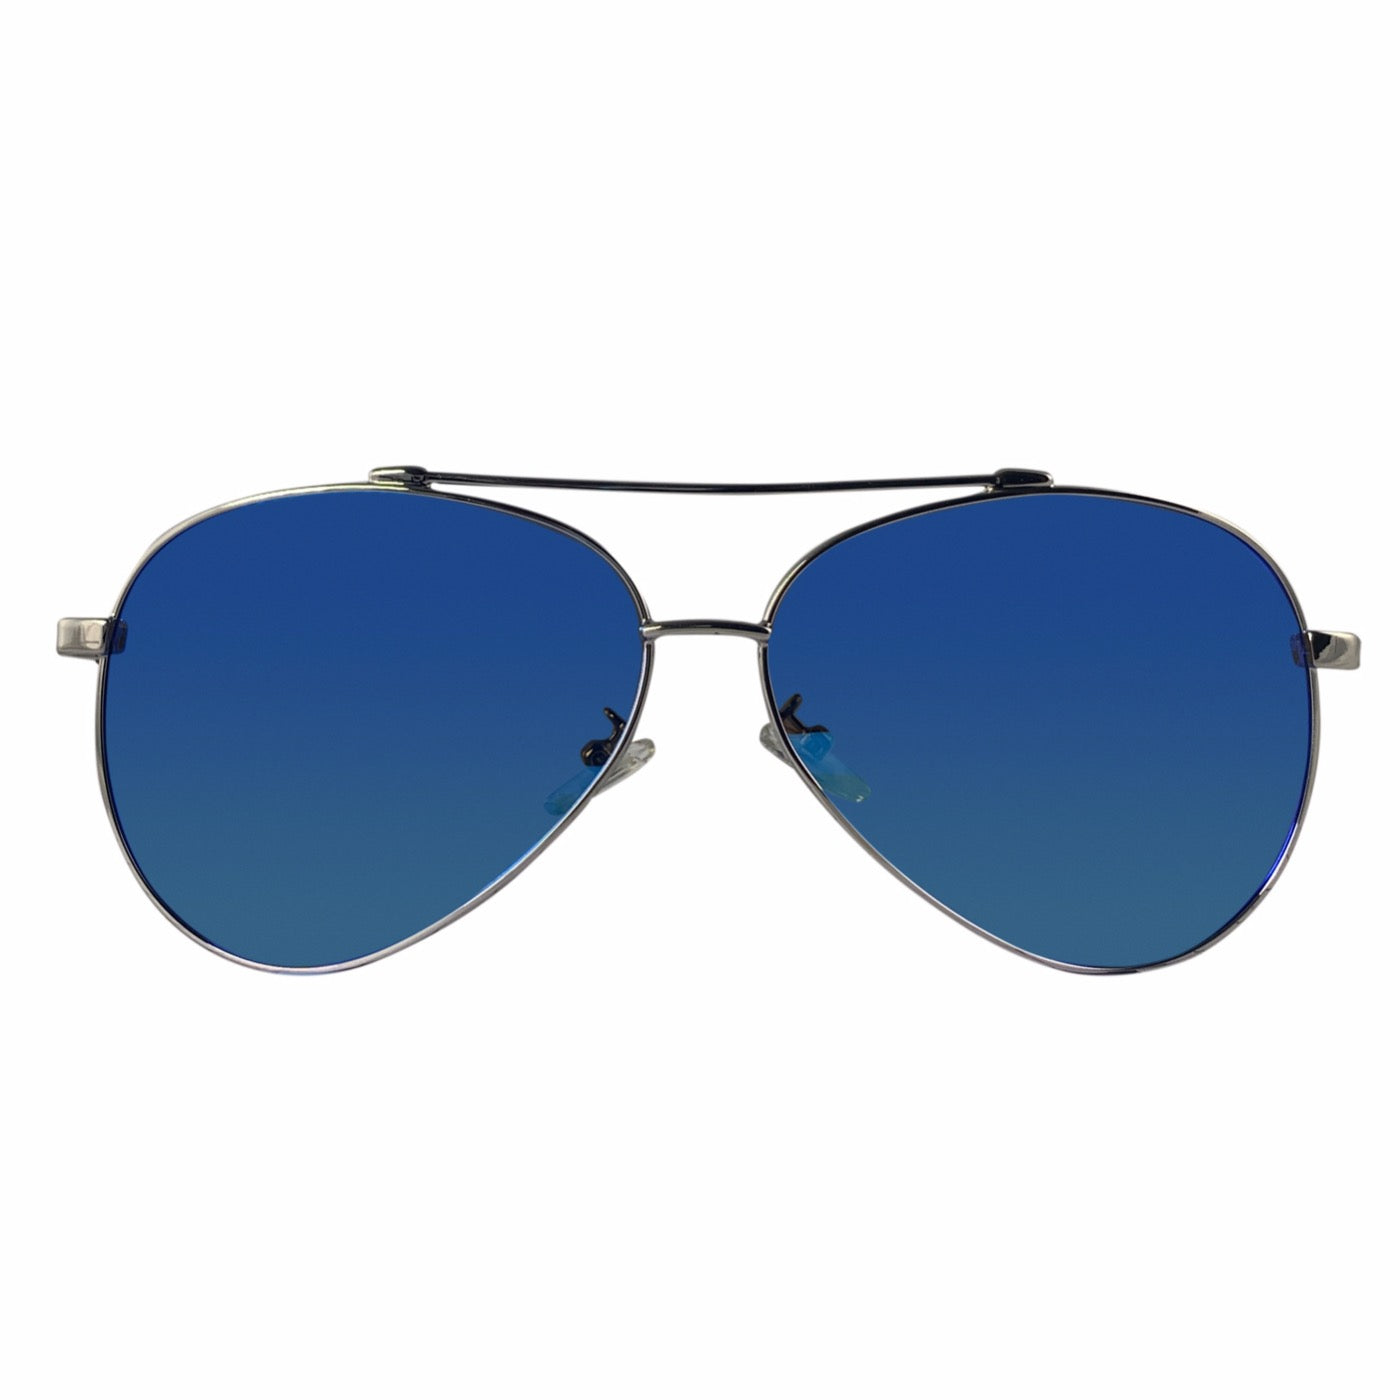 Pacific Beach - Small (Lens 55mm) Polarized Sunglasses with UV400 Lenses | Cali Life Co.